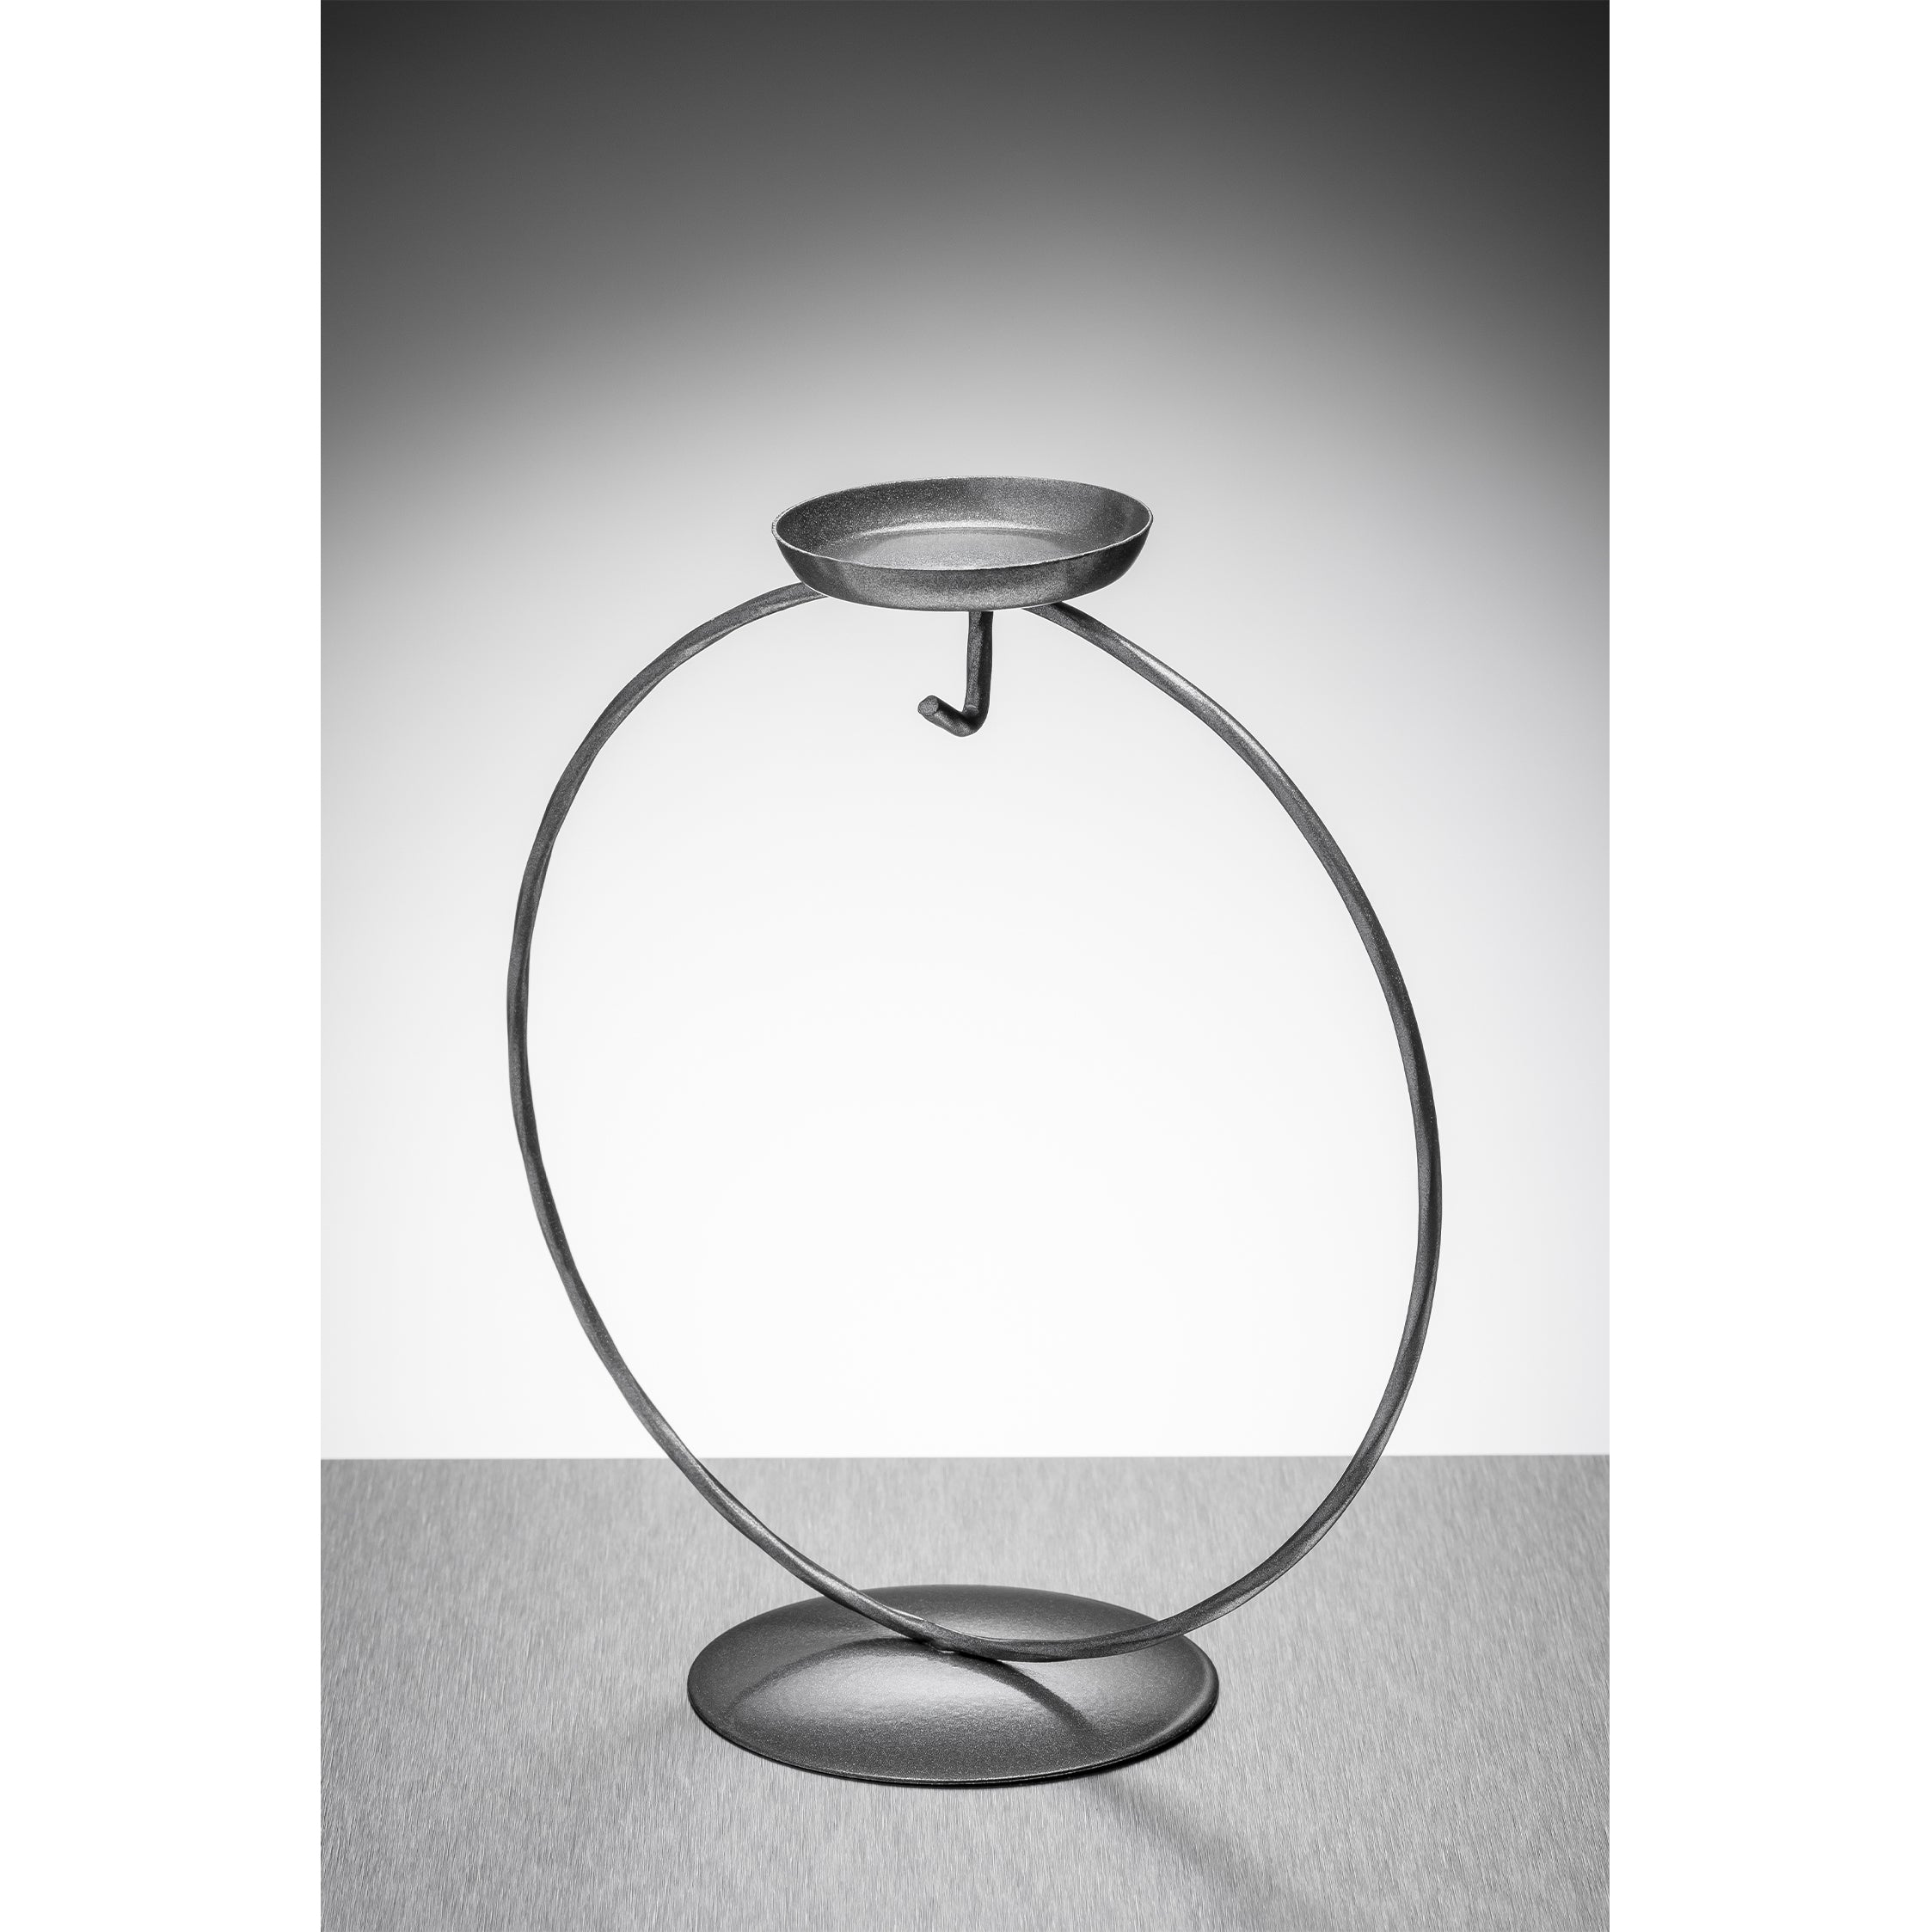 Circular Metal Ornament Stand with Tea Light Holder - Silver - Aspire Art Glass